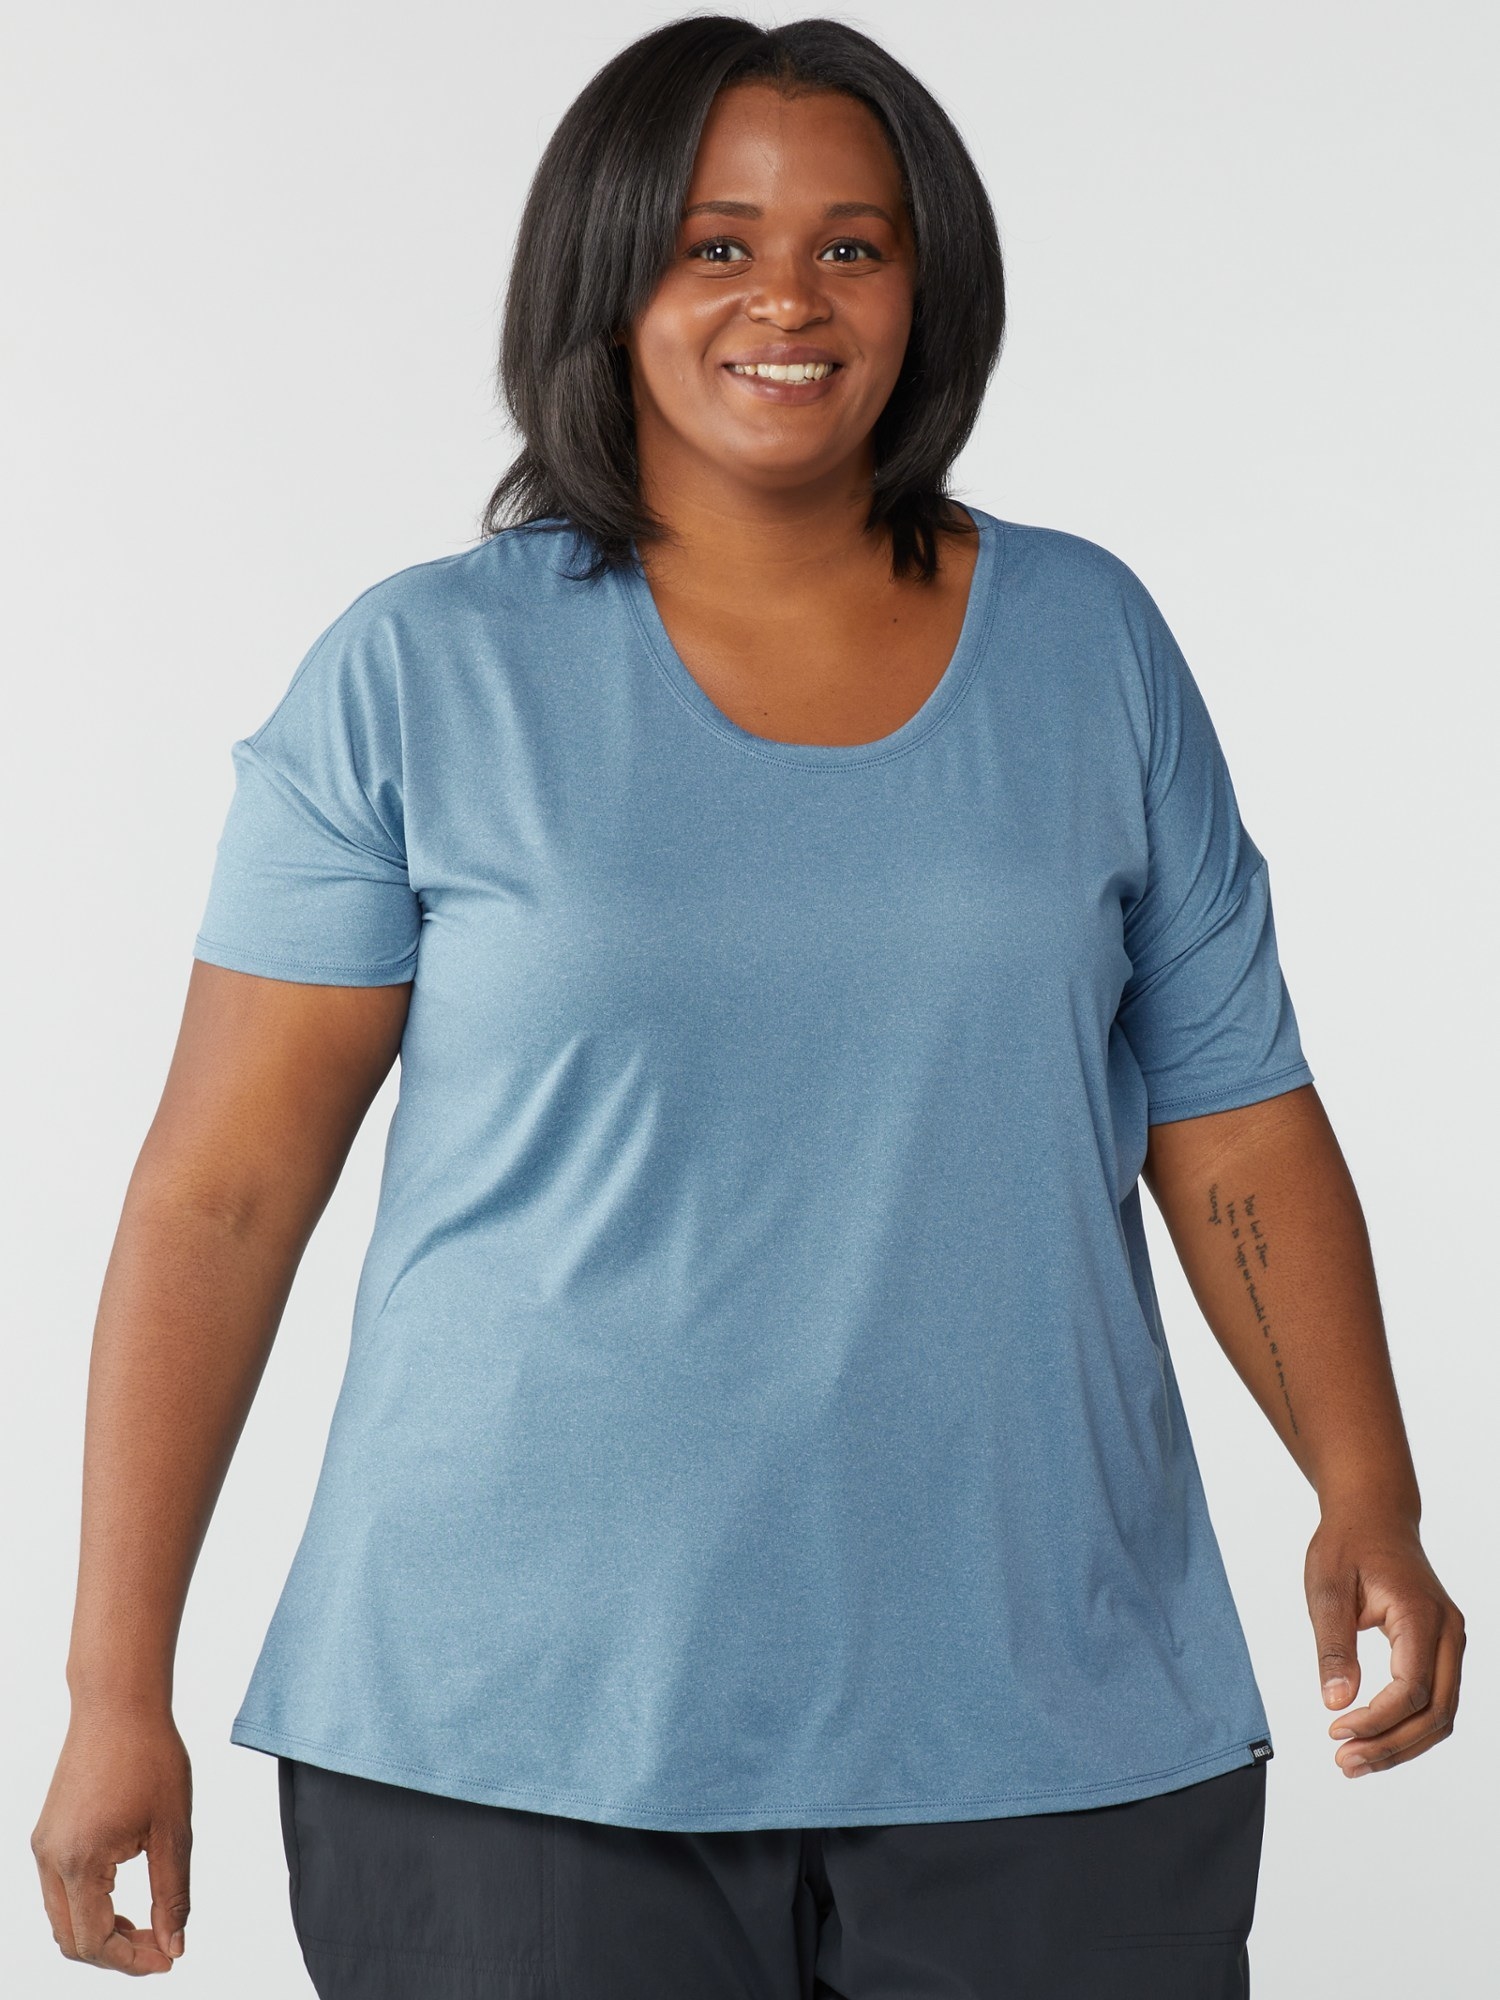 model in a blue t-shirt